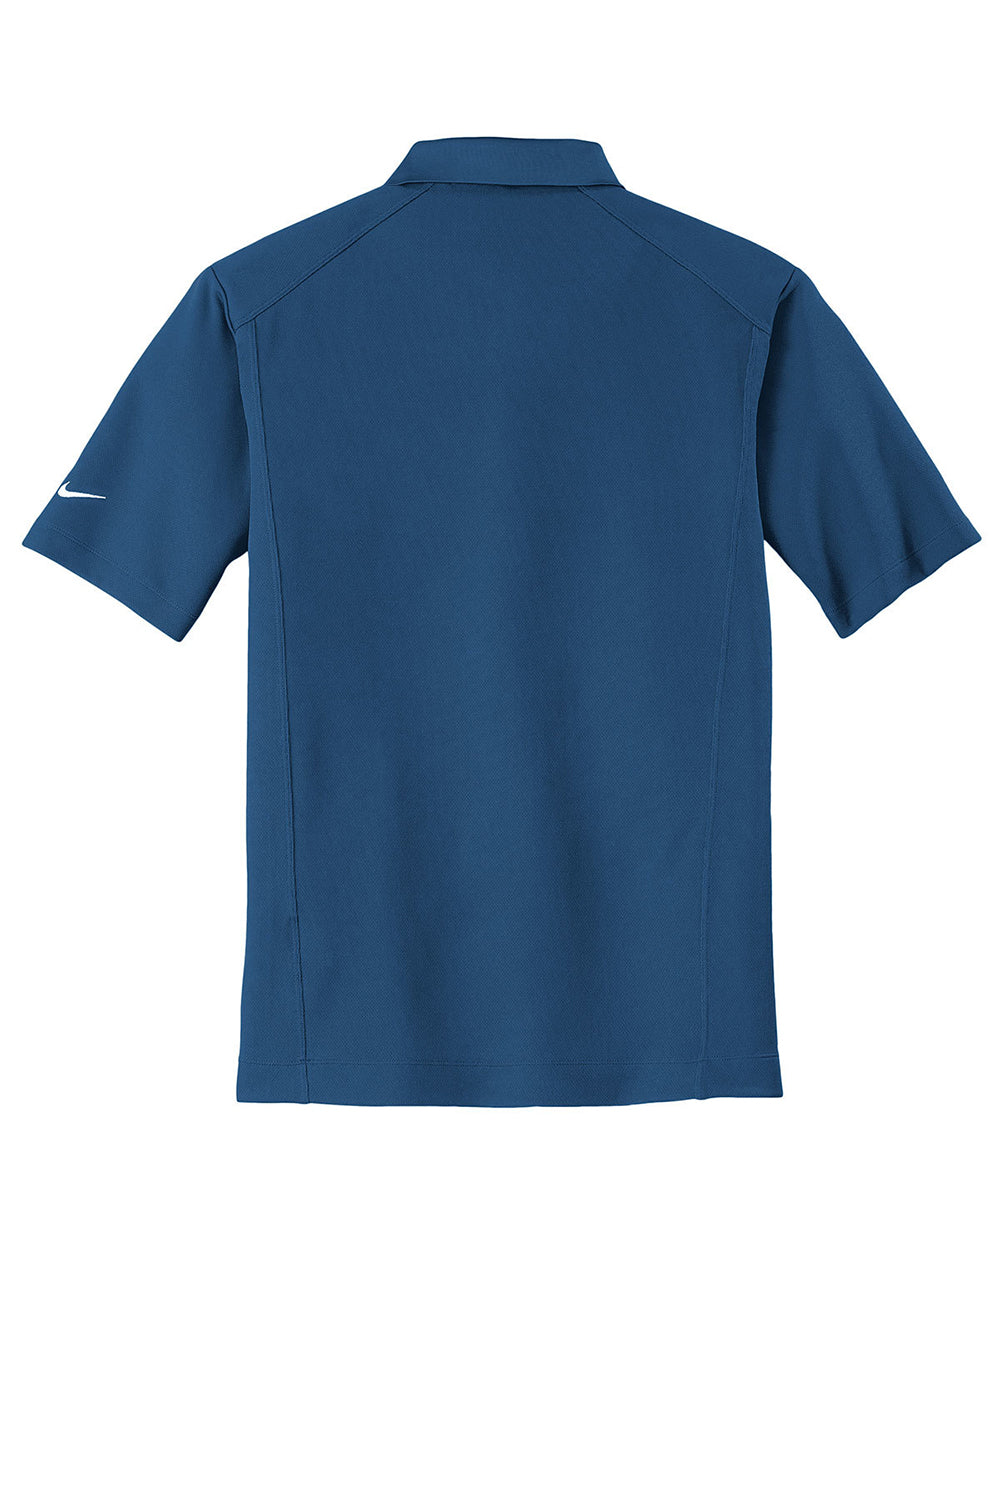 Nike 267020 Mens Classic Dri-Fit Moisture Wicking Short Sleeve Polo Shirt Court Blue Flat Back